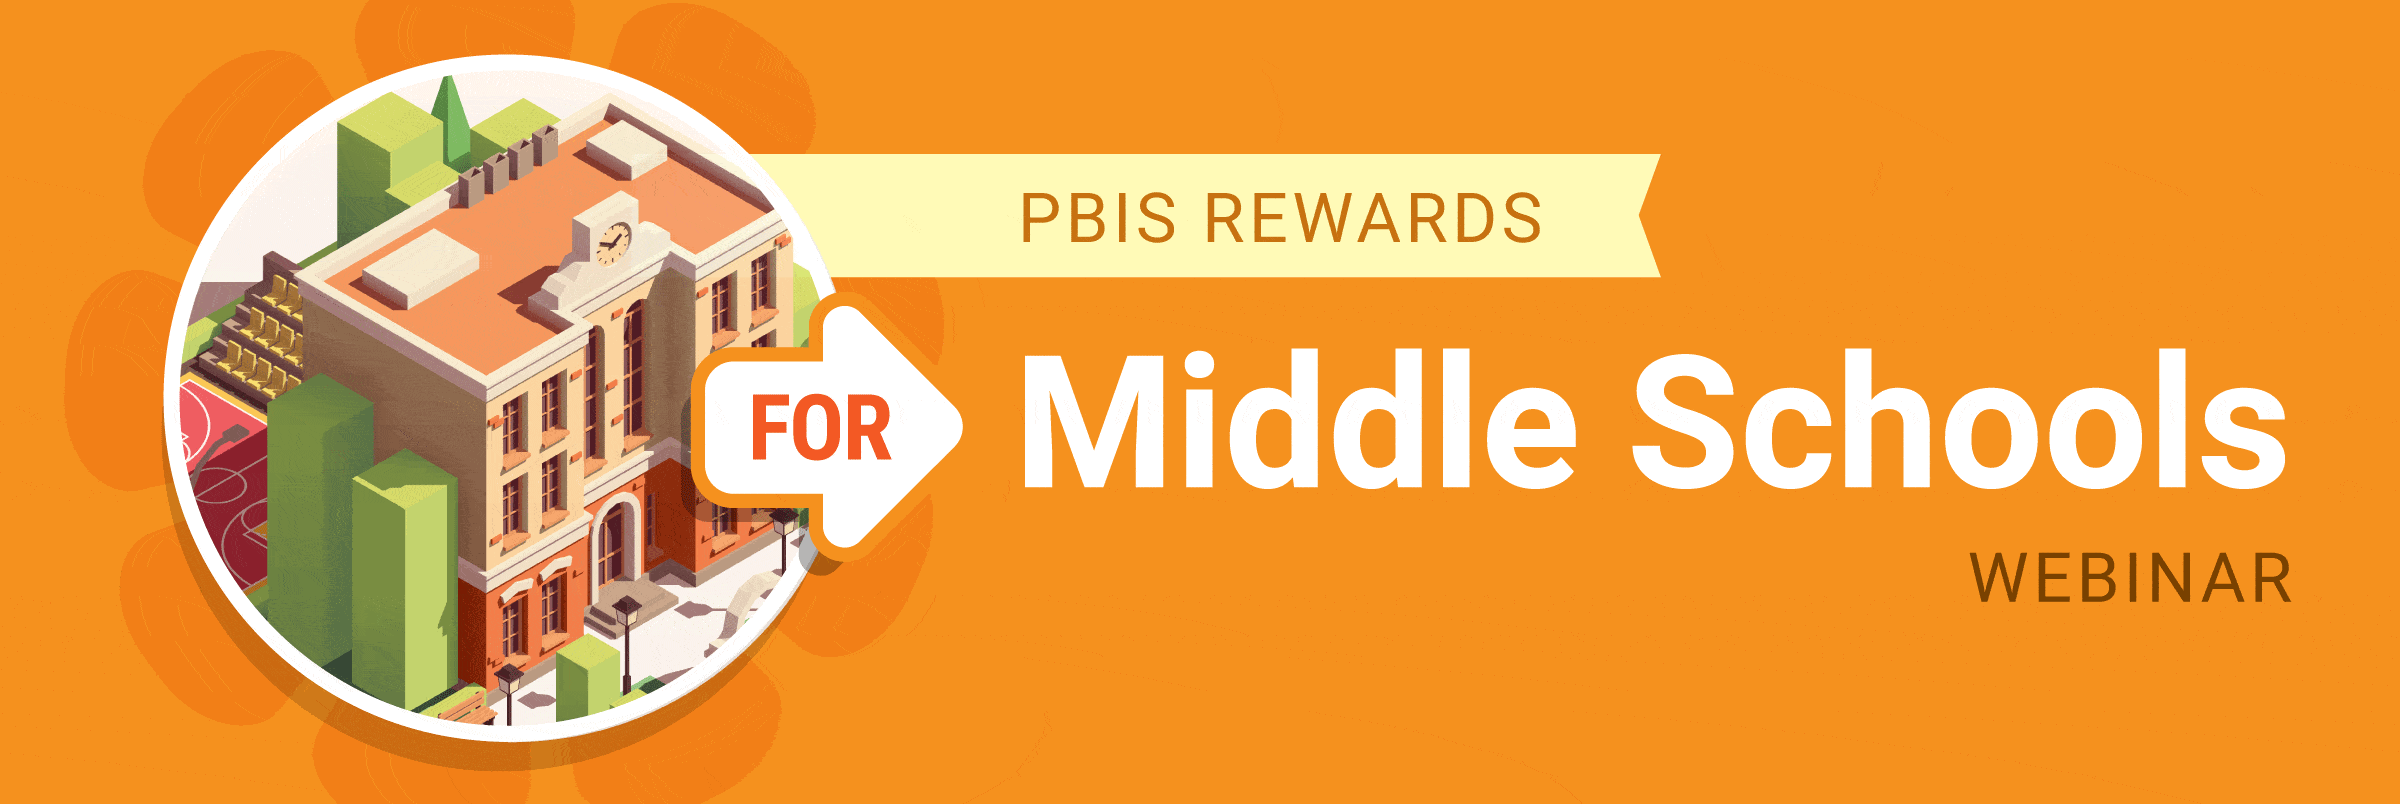 PBIS Rewards Flash Webinar - PBIS Rewards for Middle Schools